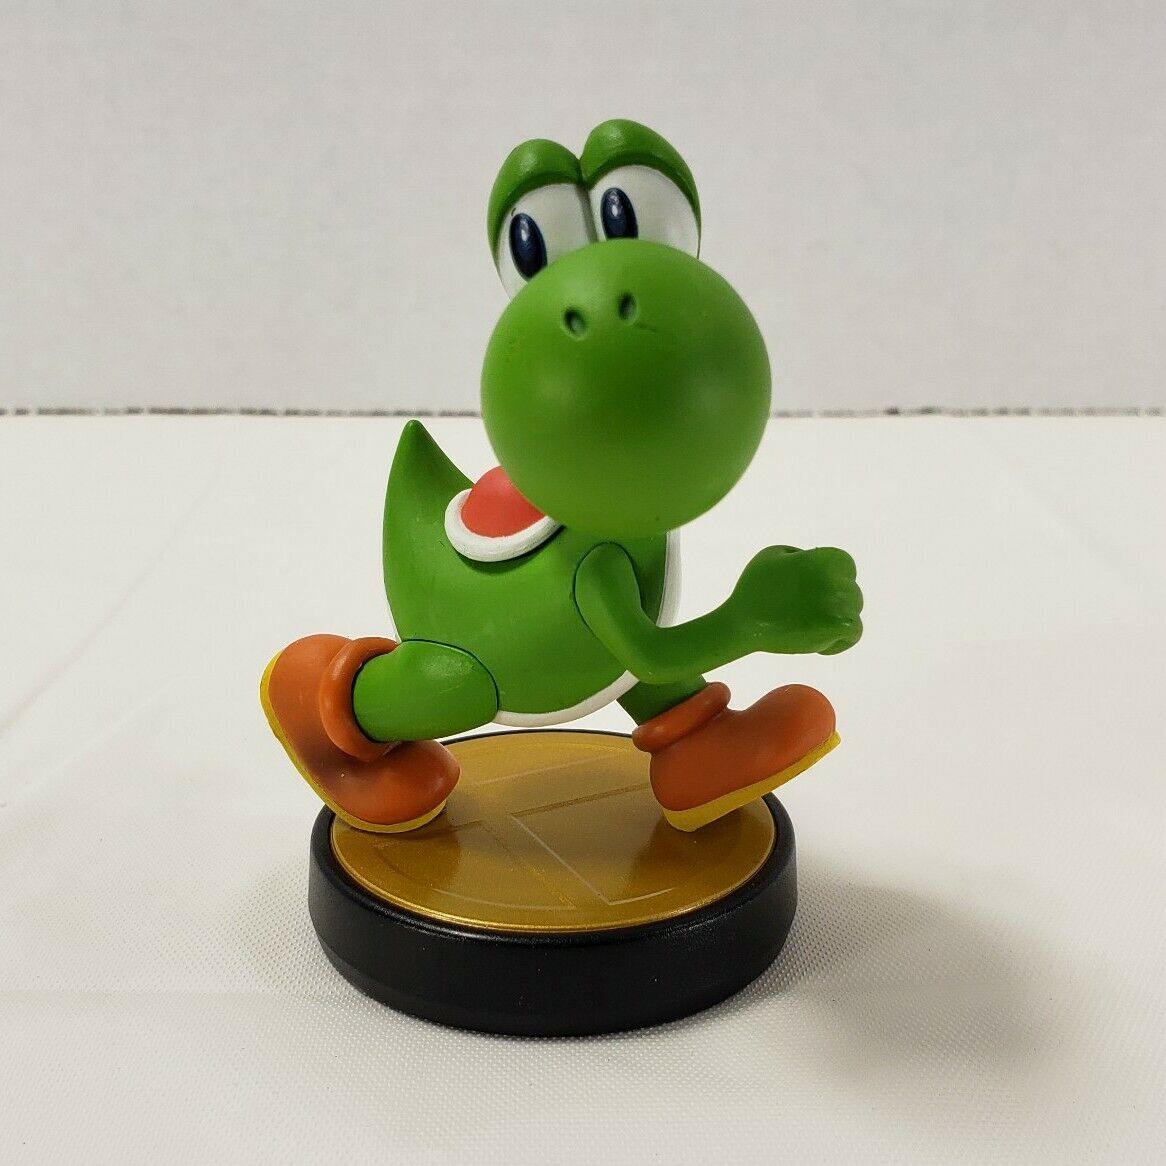 Super Smash Bros. Yoshi Amiibo Nintendo Switch Wii U 3DS US Ultimate Figure  | eBay